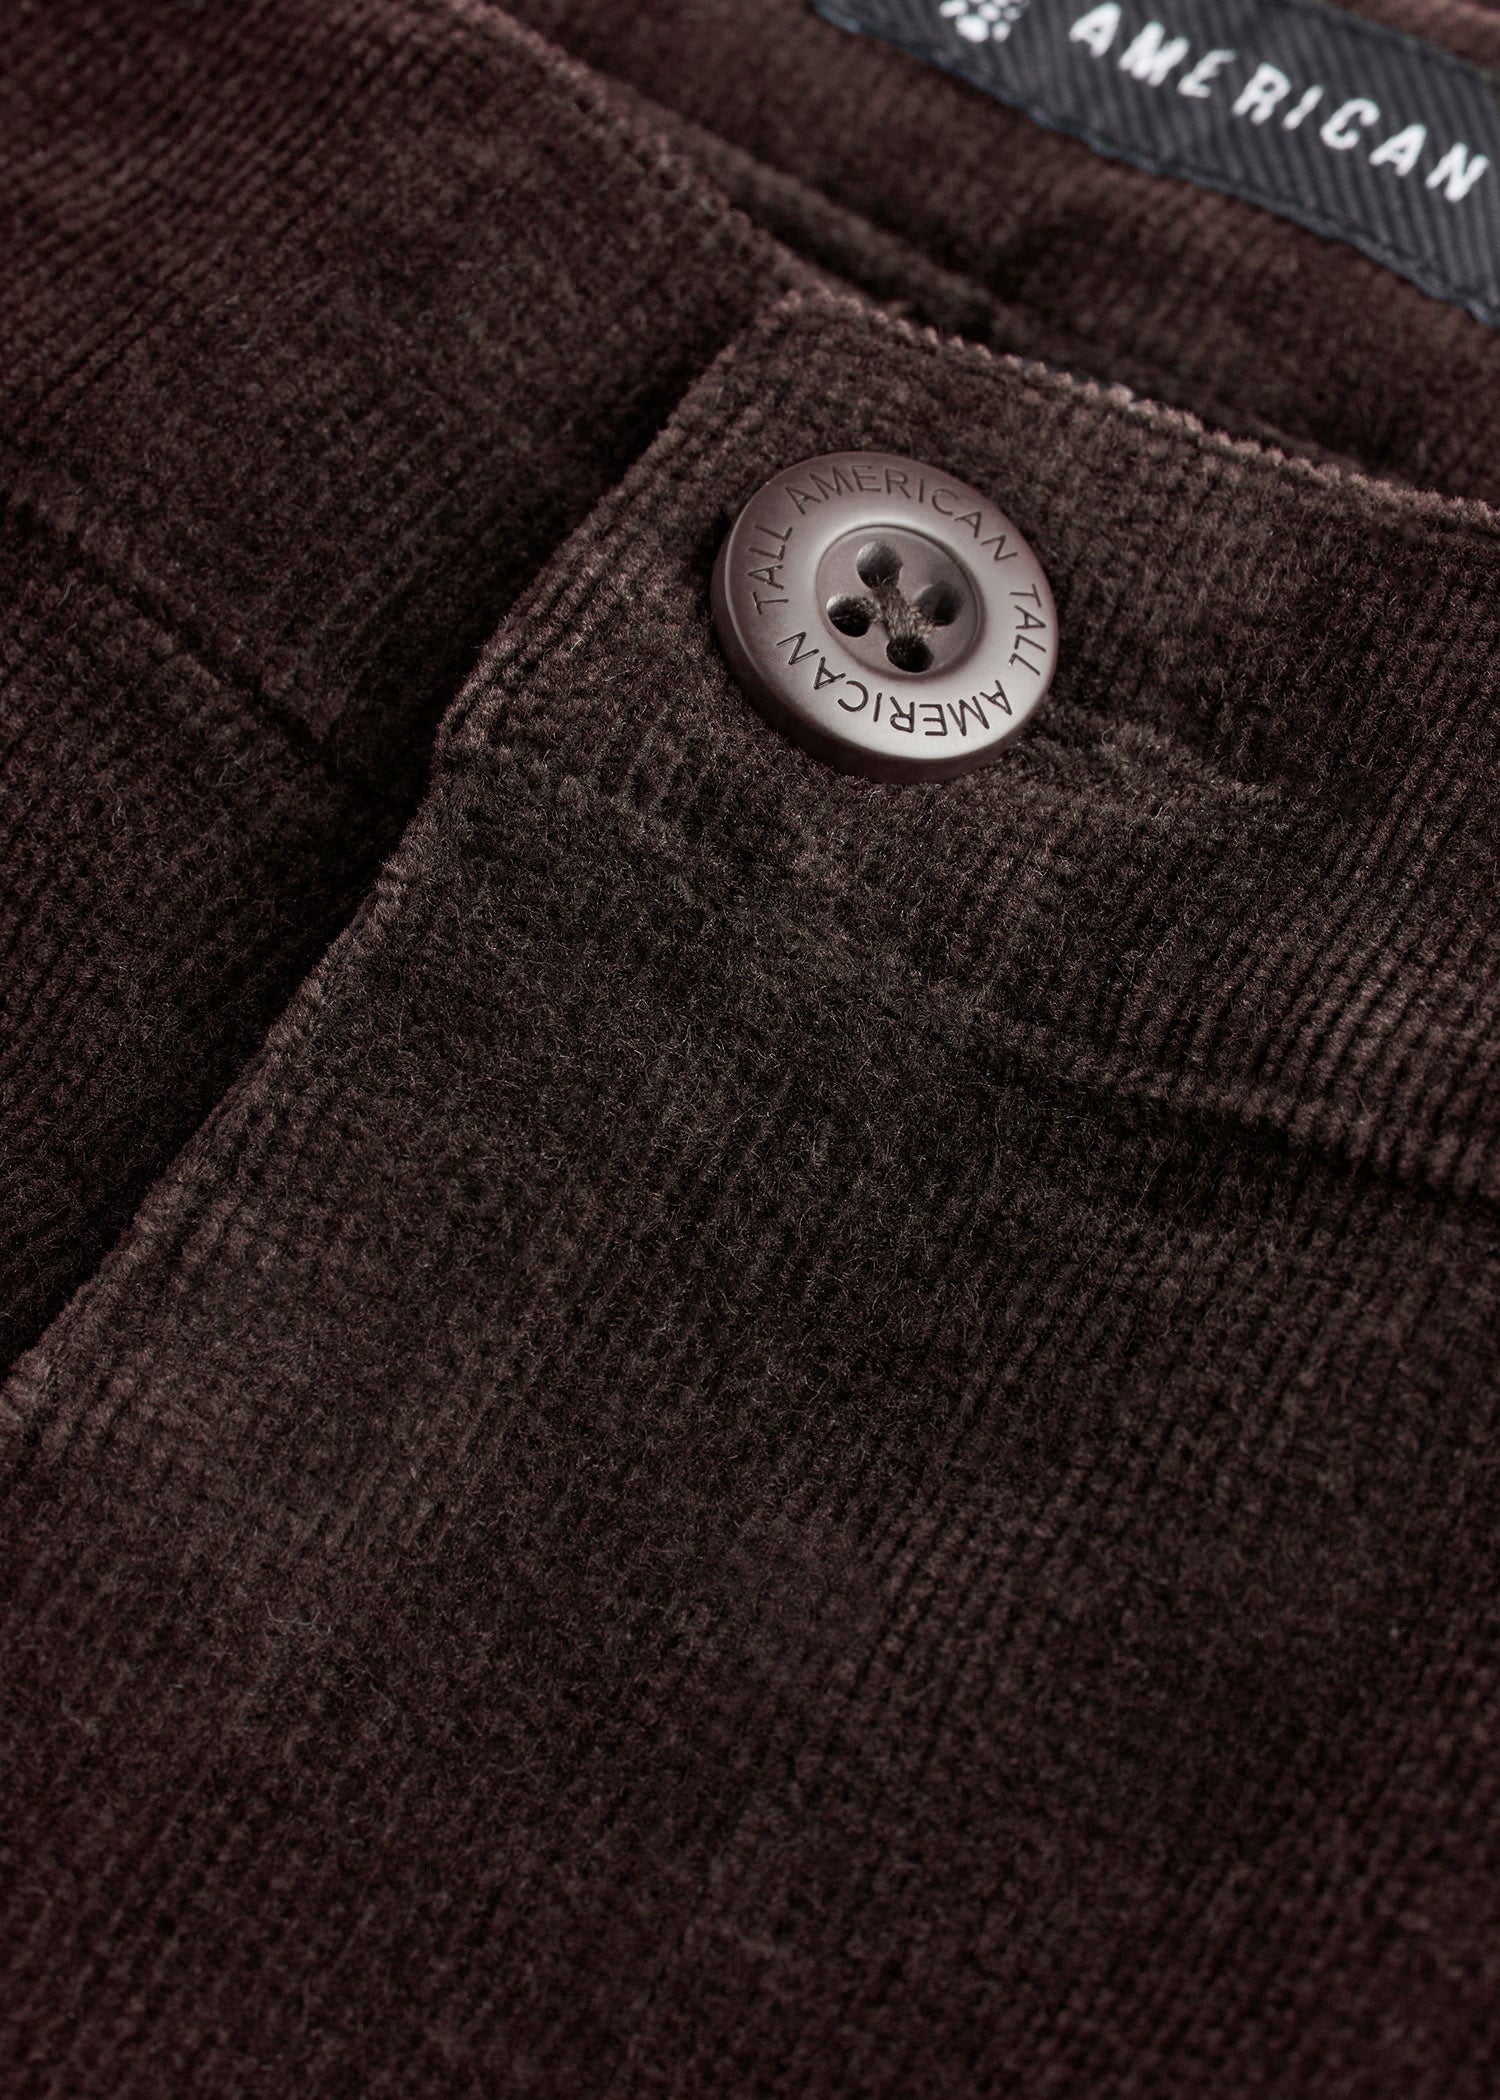 Men's Grey Corduroy Trousers | Vintage Corduroy Trousers